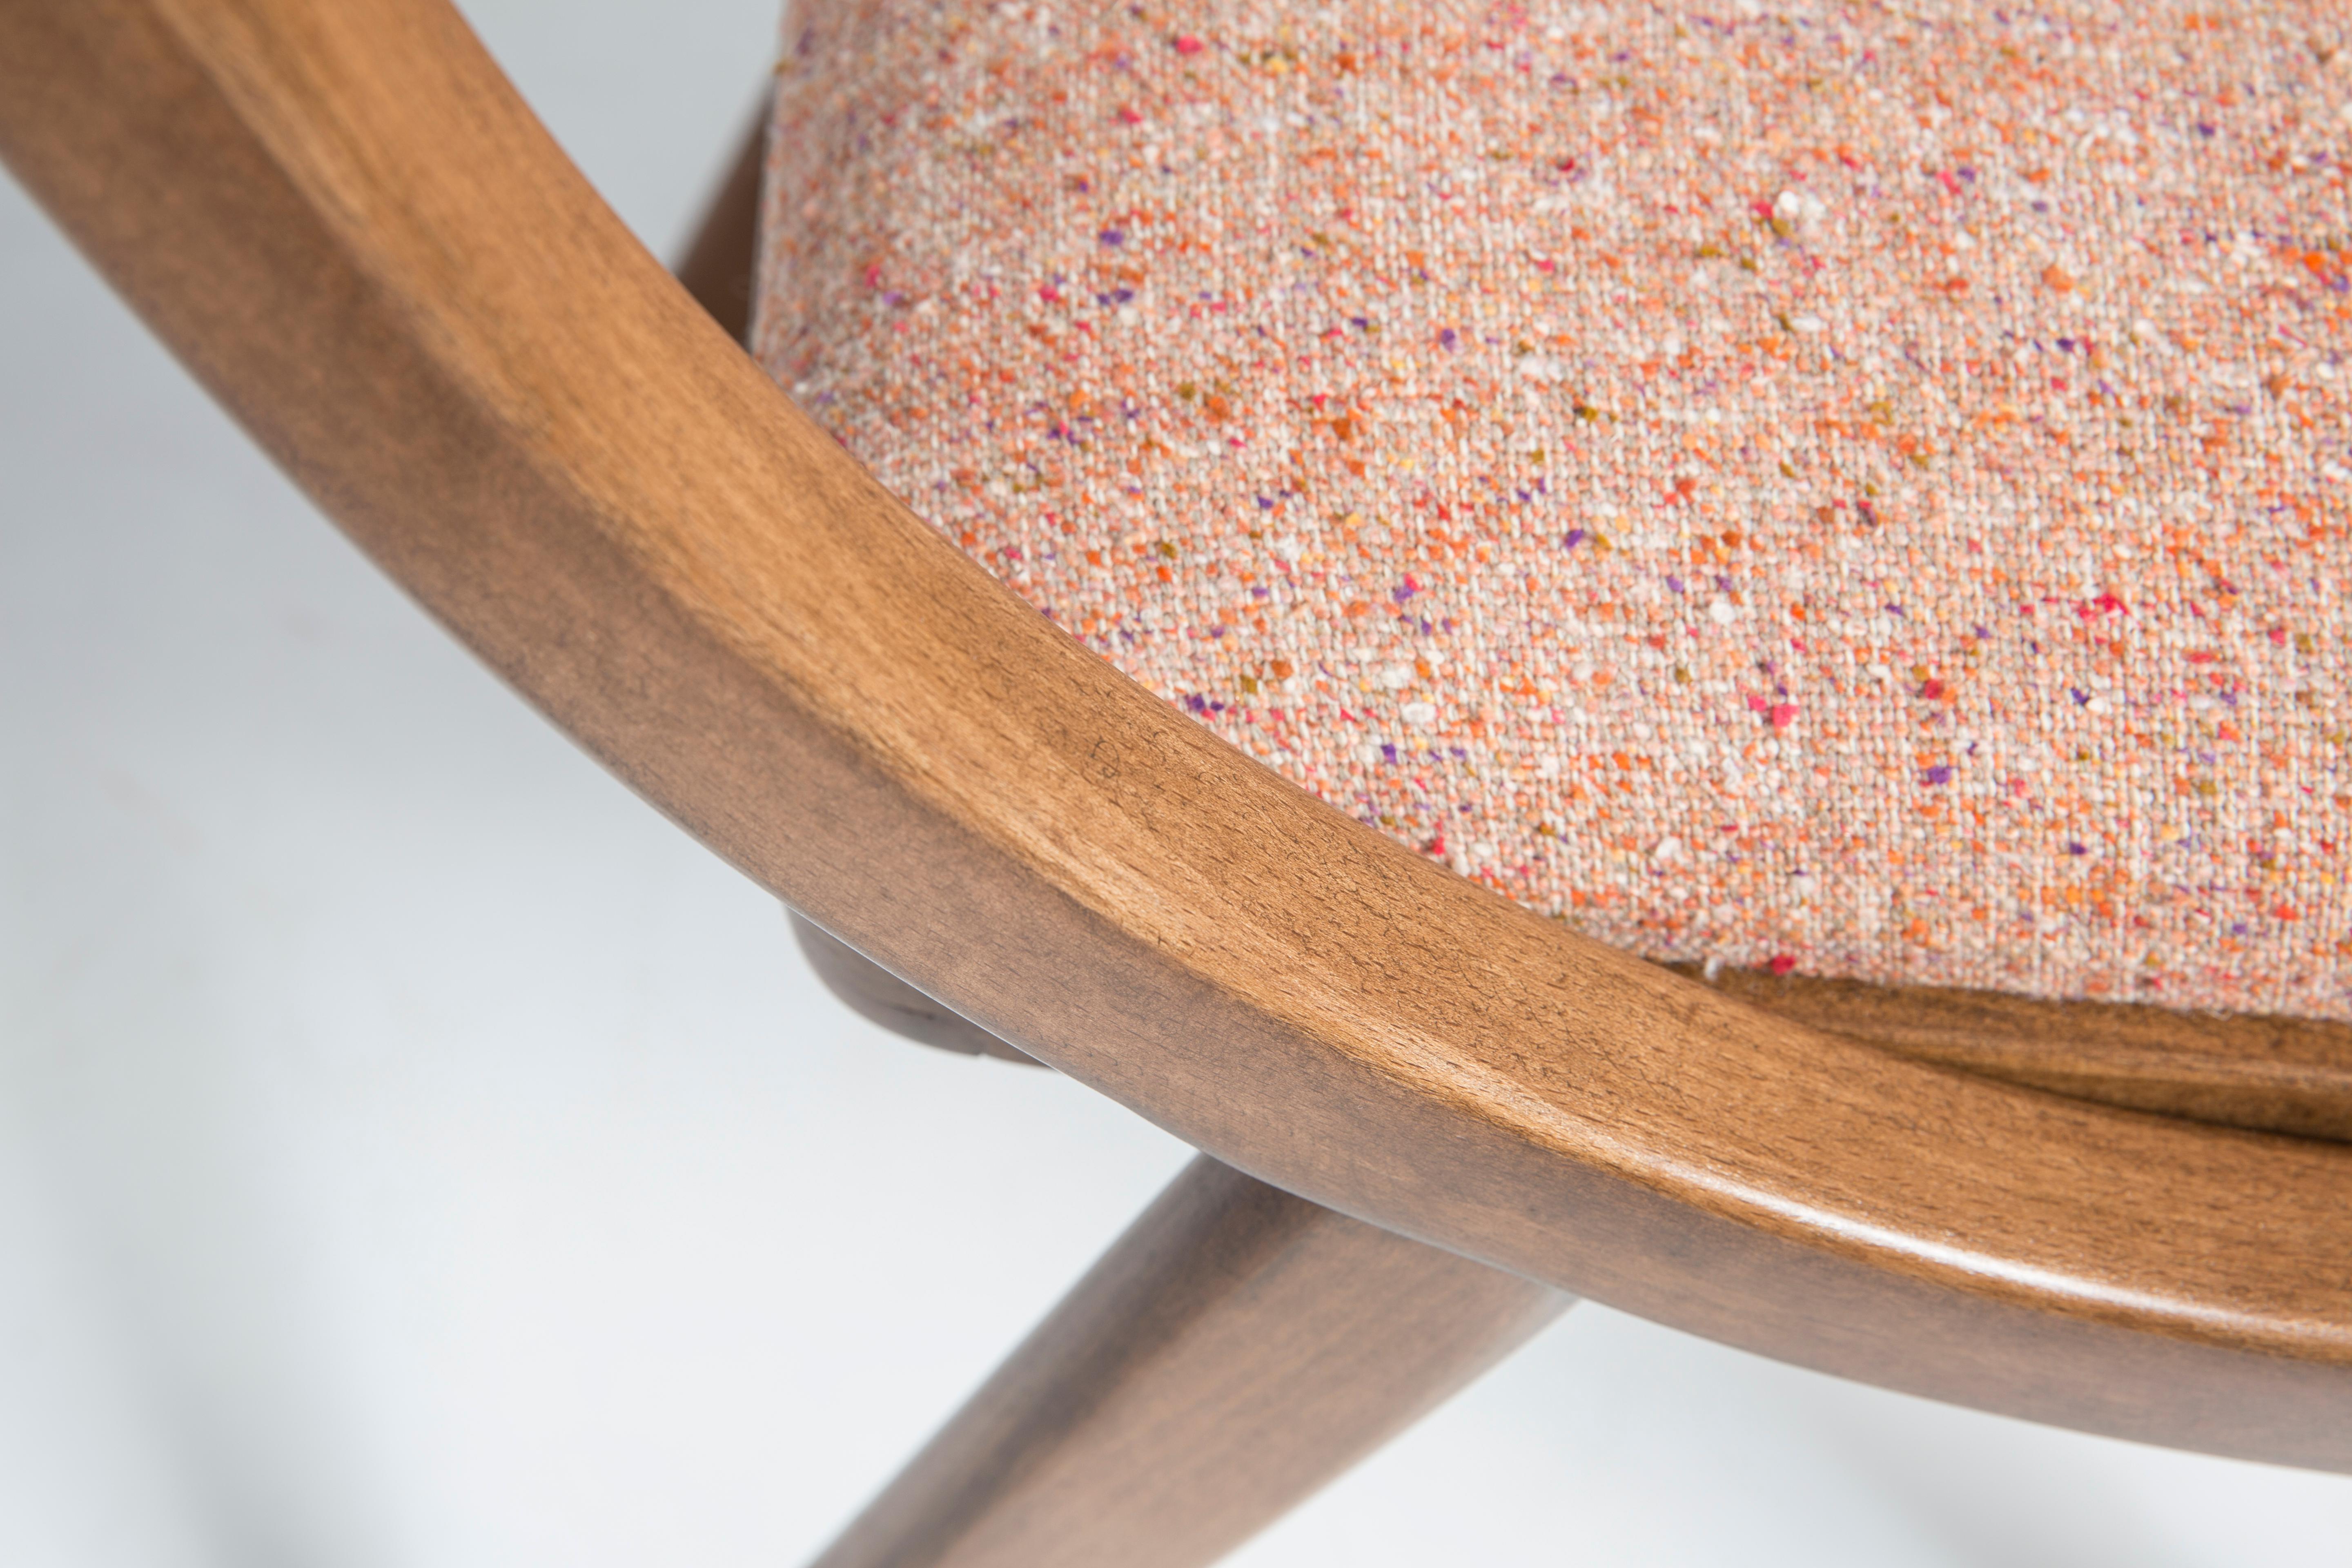 Textile Mid Century Modern Bumerang Chair, Peach Orange Wool, Poland, 1960s For Sale